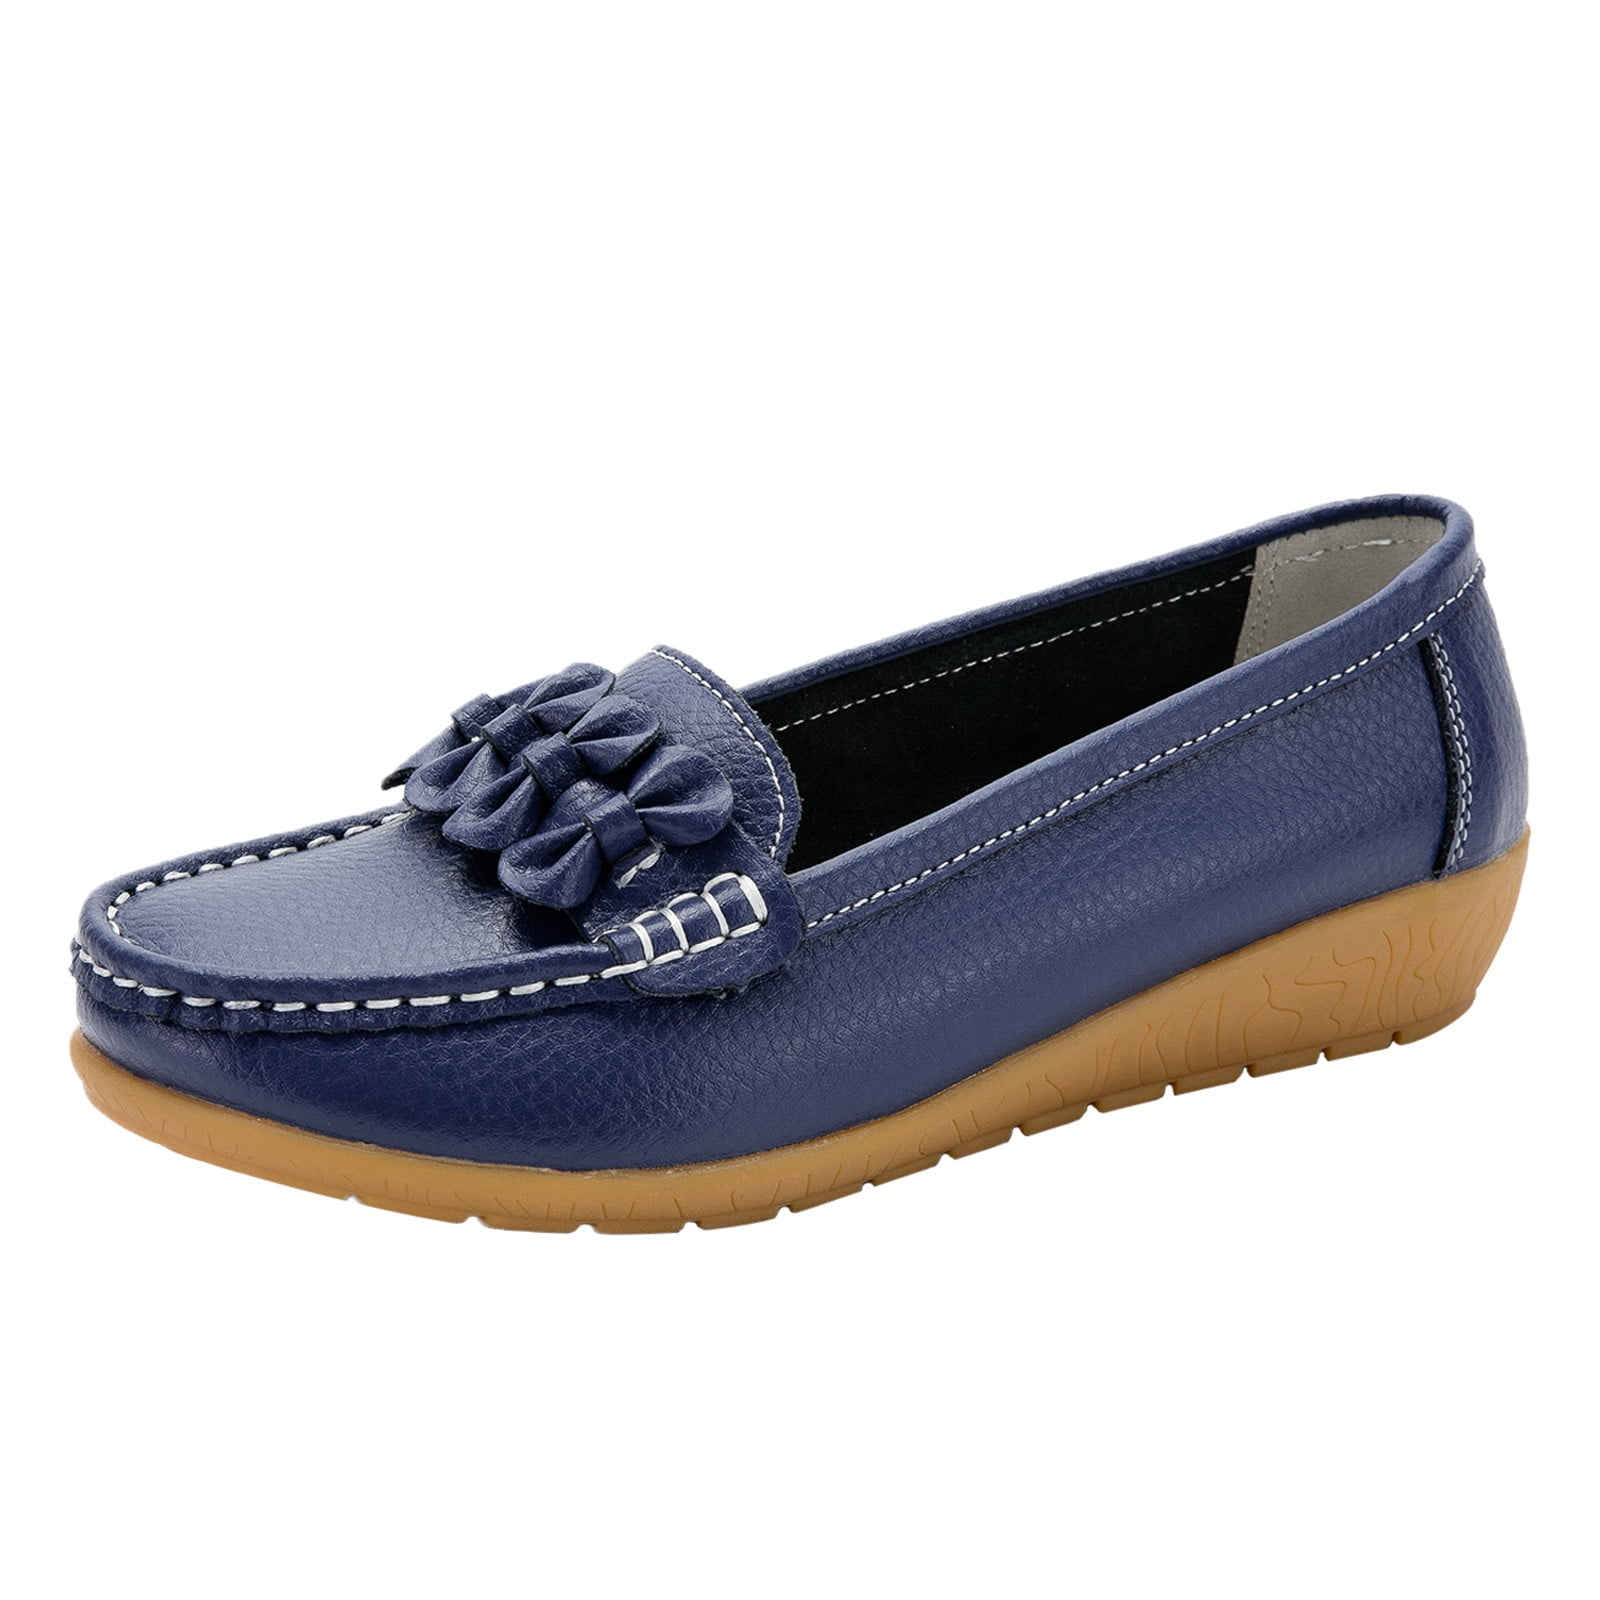 Fsqjgq Womens Shoes Slip On Women Comfort Walking Flat Loafers Casual Shoes  Driving Loafers Walking Shoes for Women Blue 41